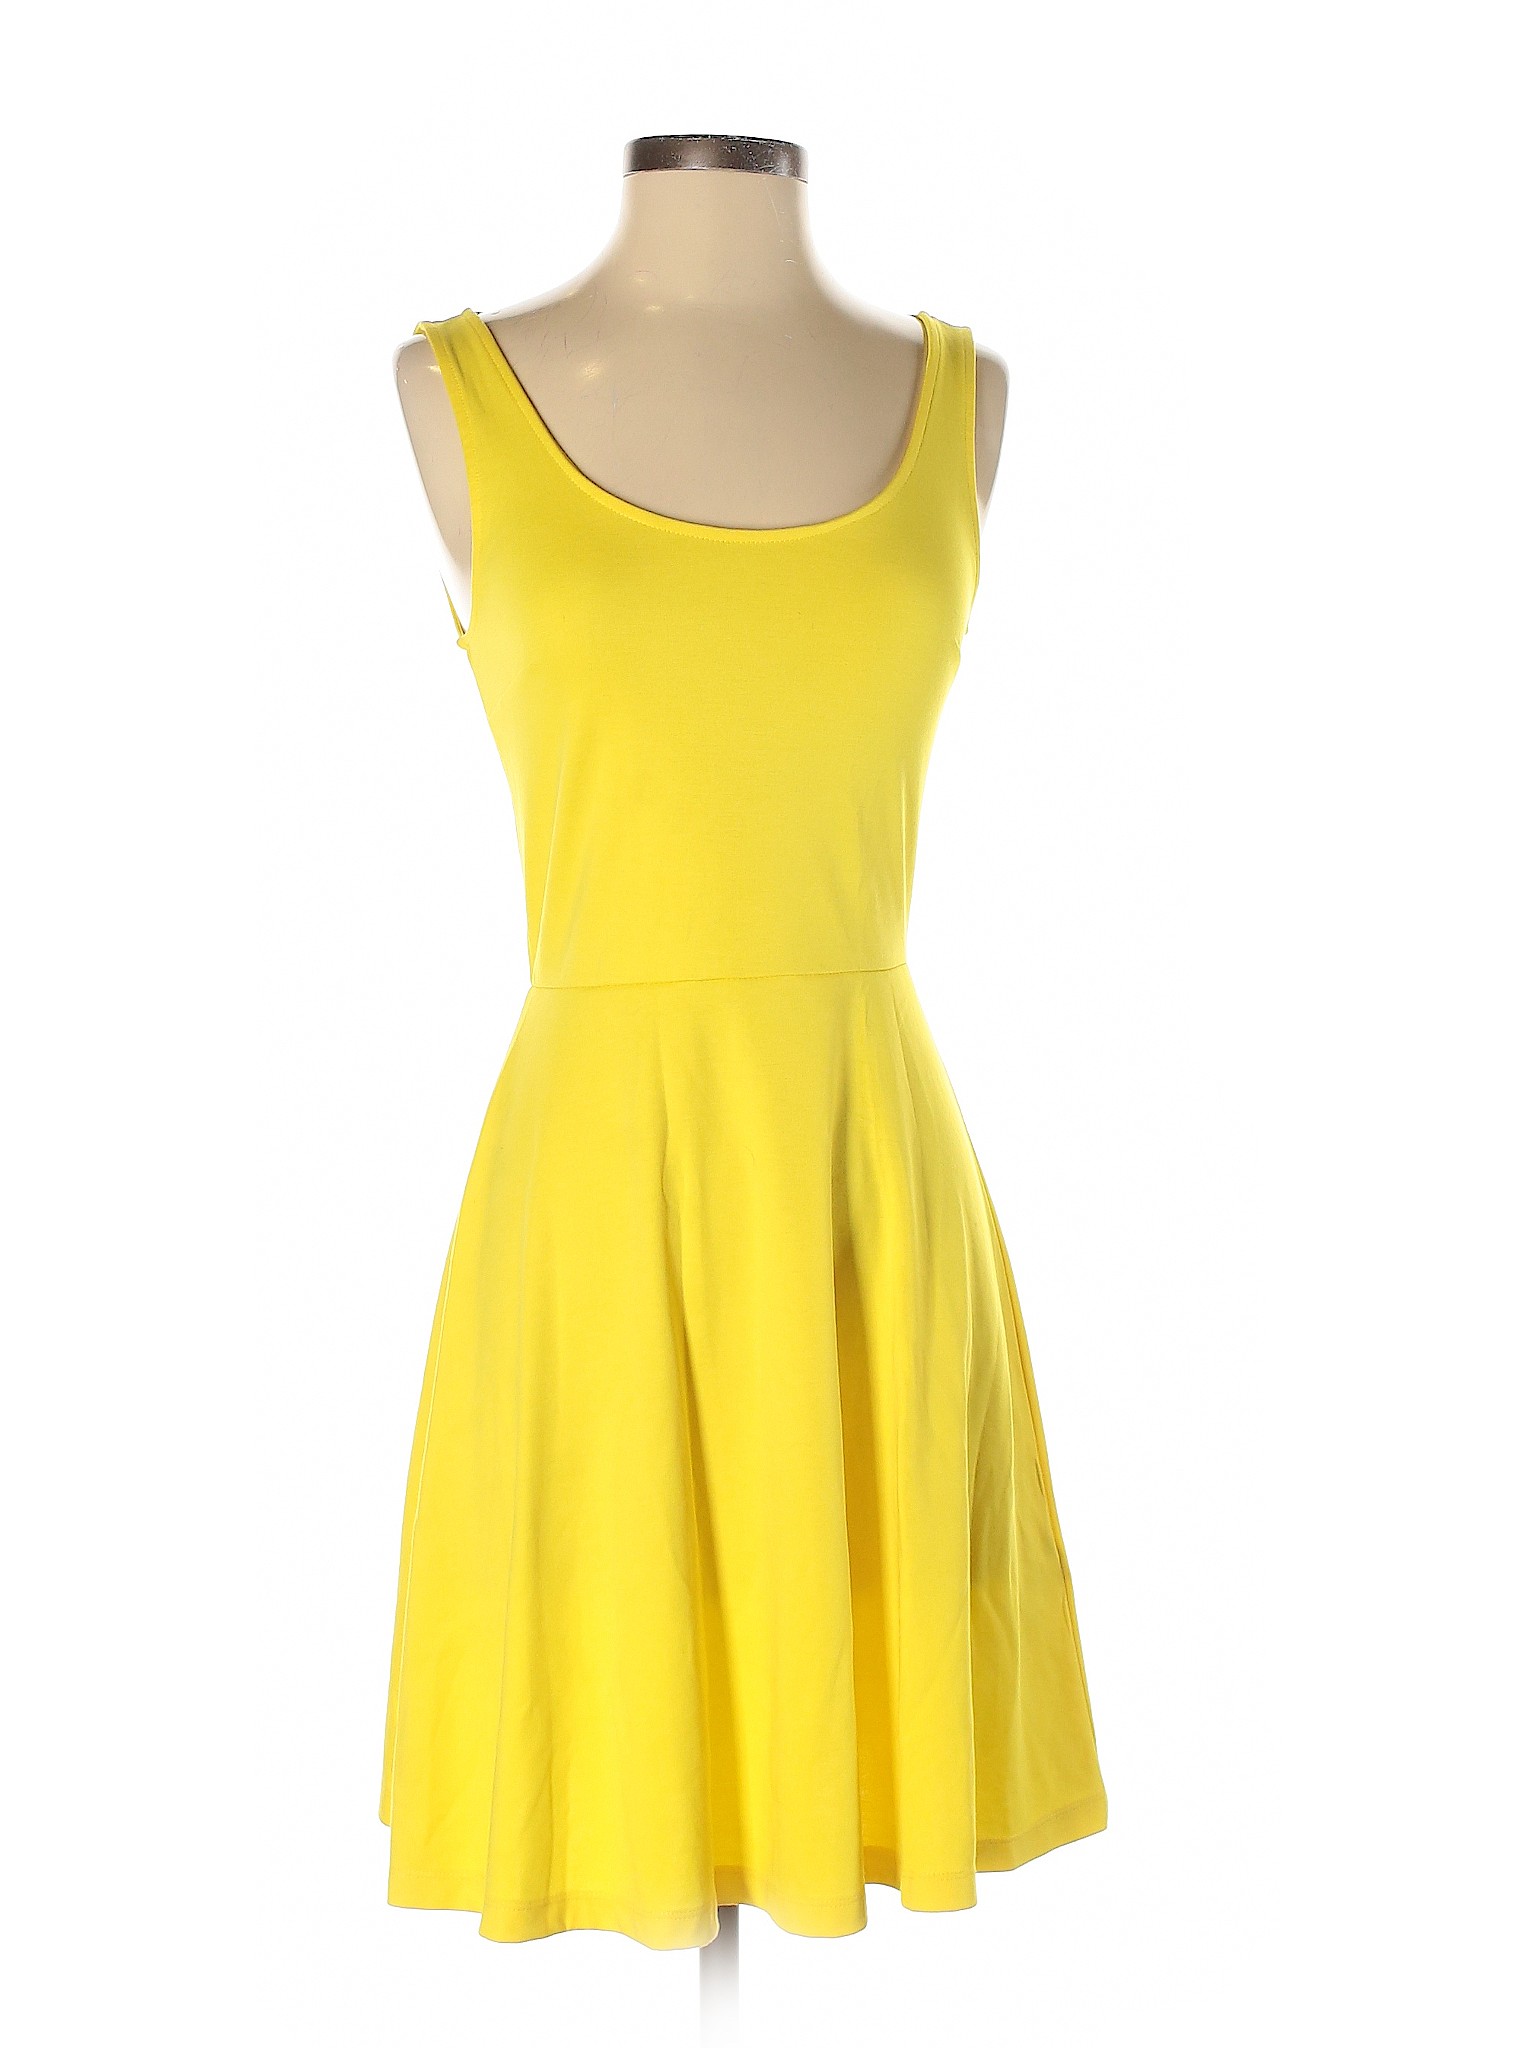 H&M Women Yellow Casual Dress XS | eBay